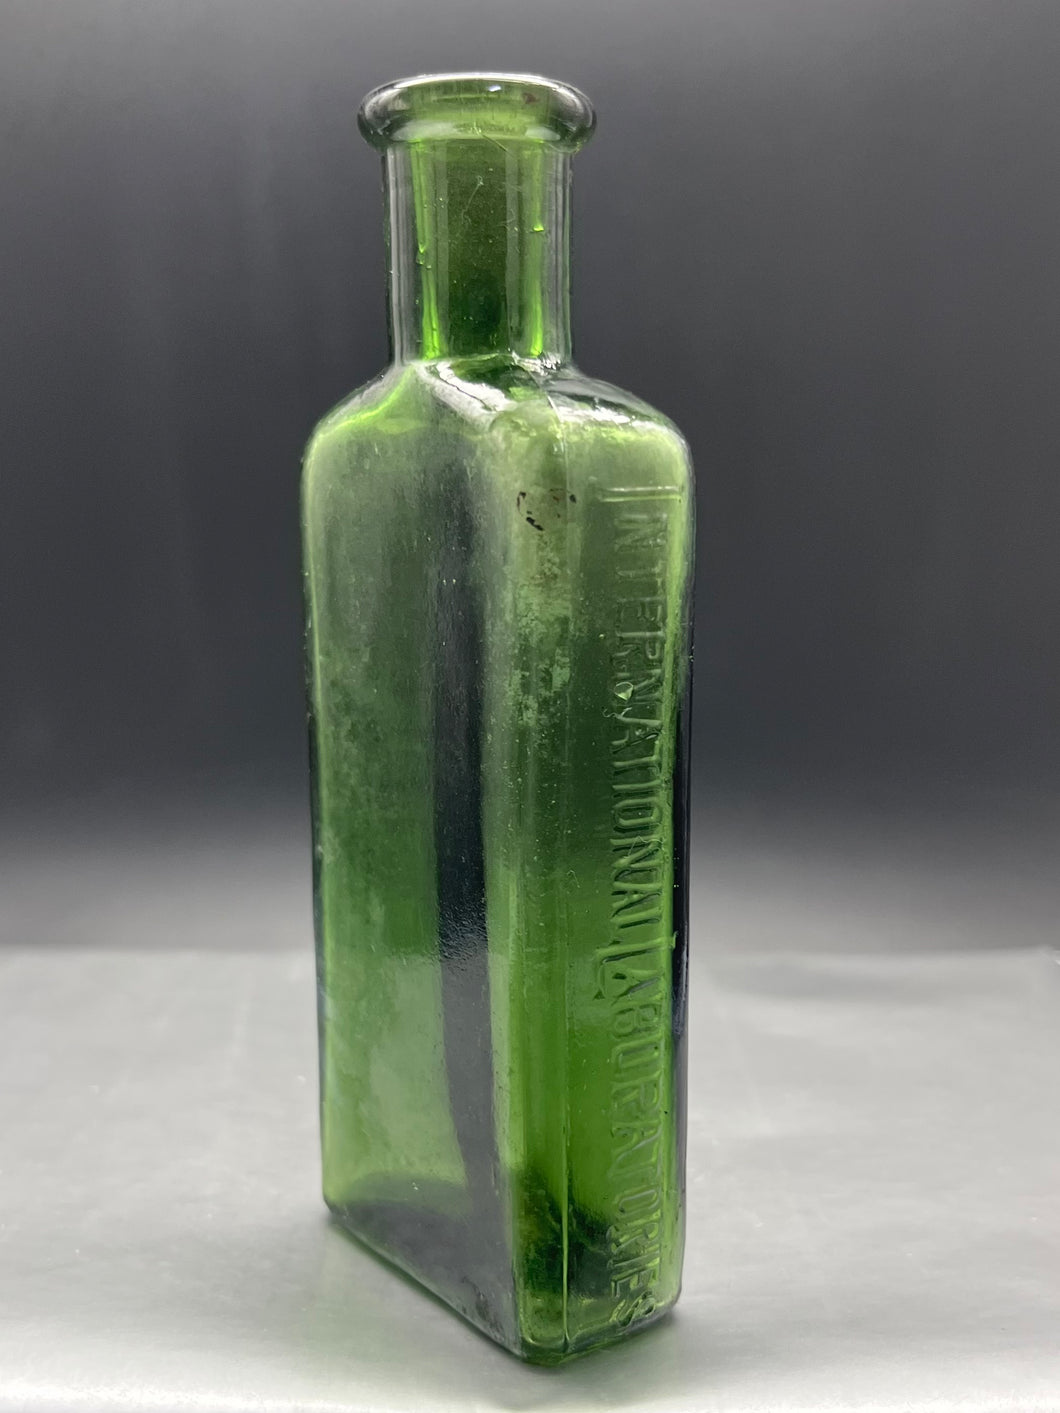 International Laboratories Small Green Poison Bottle